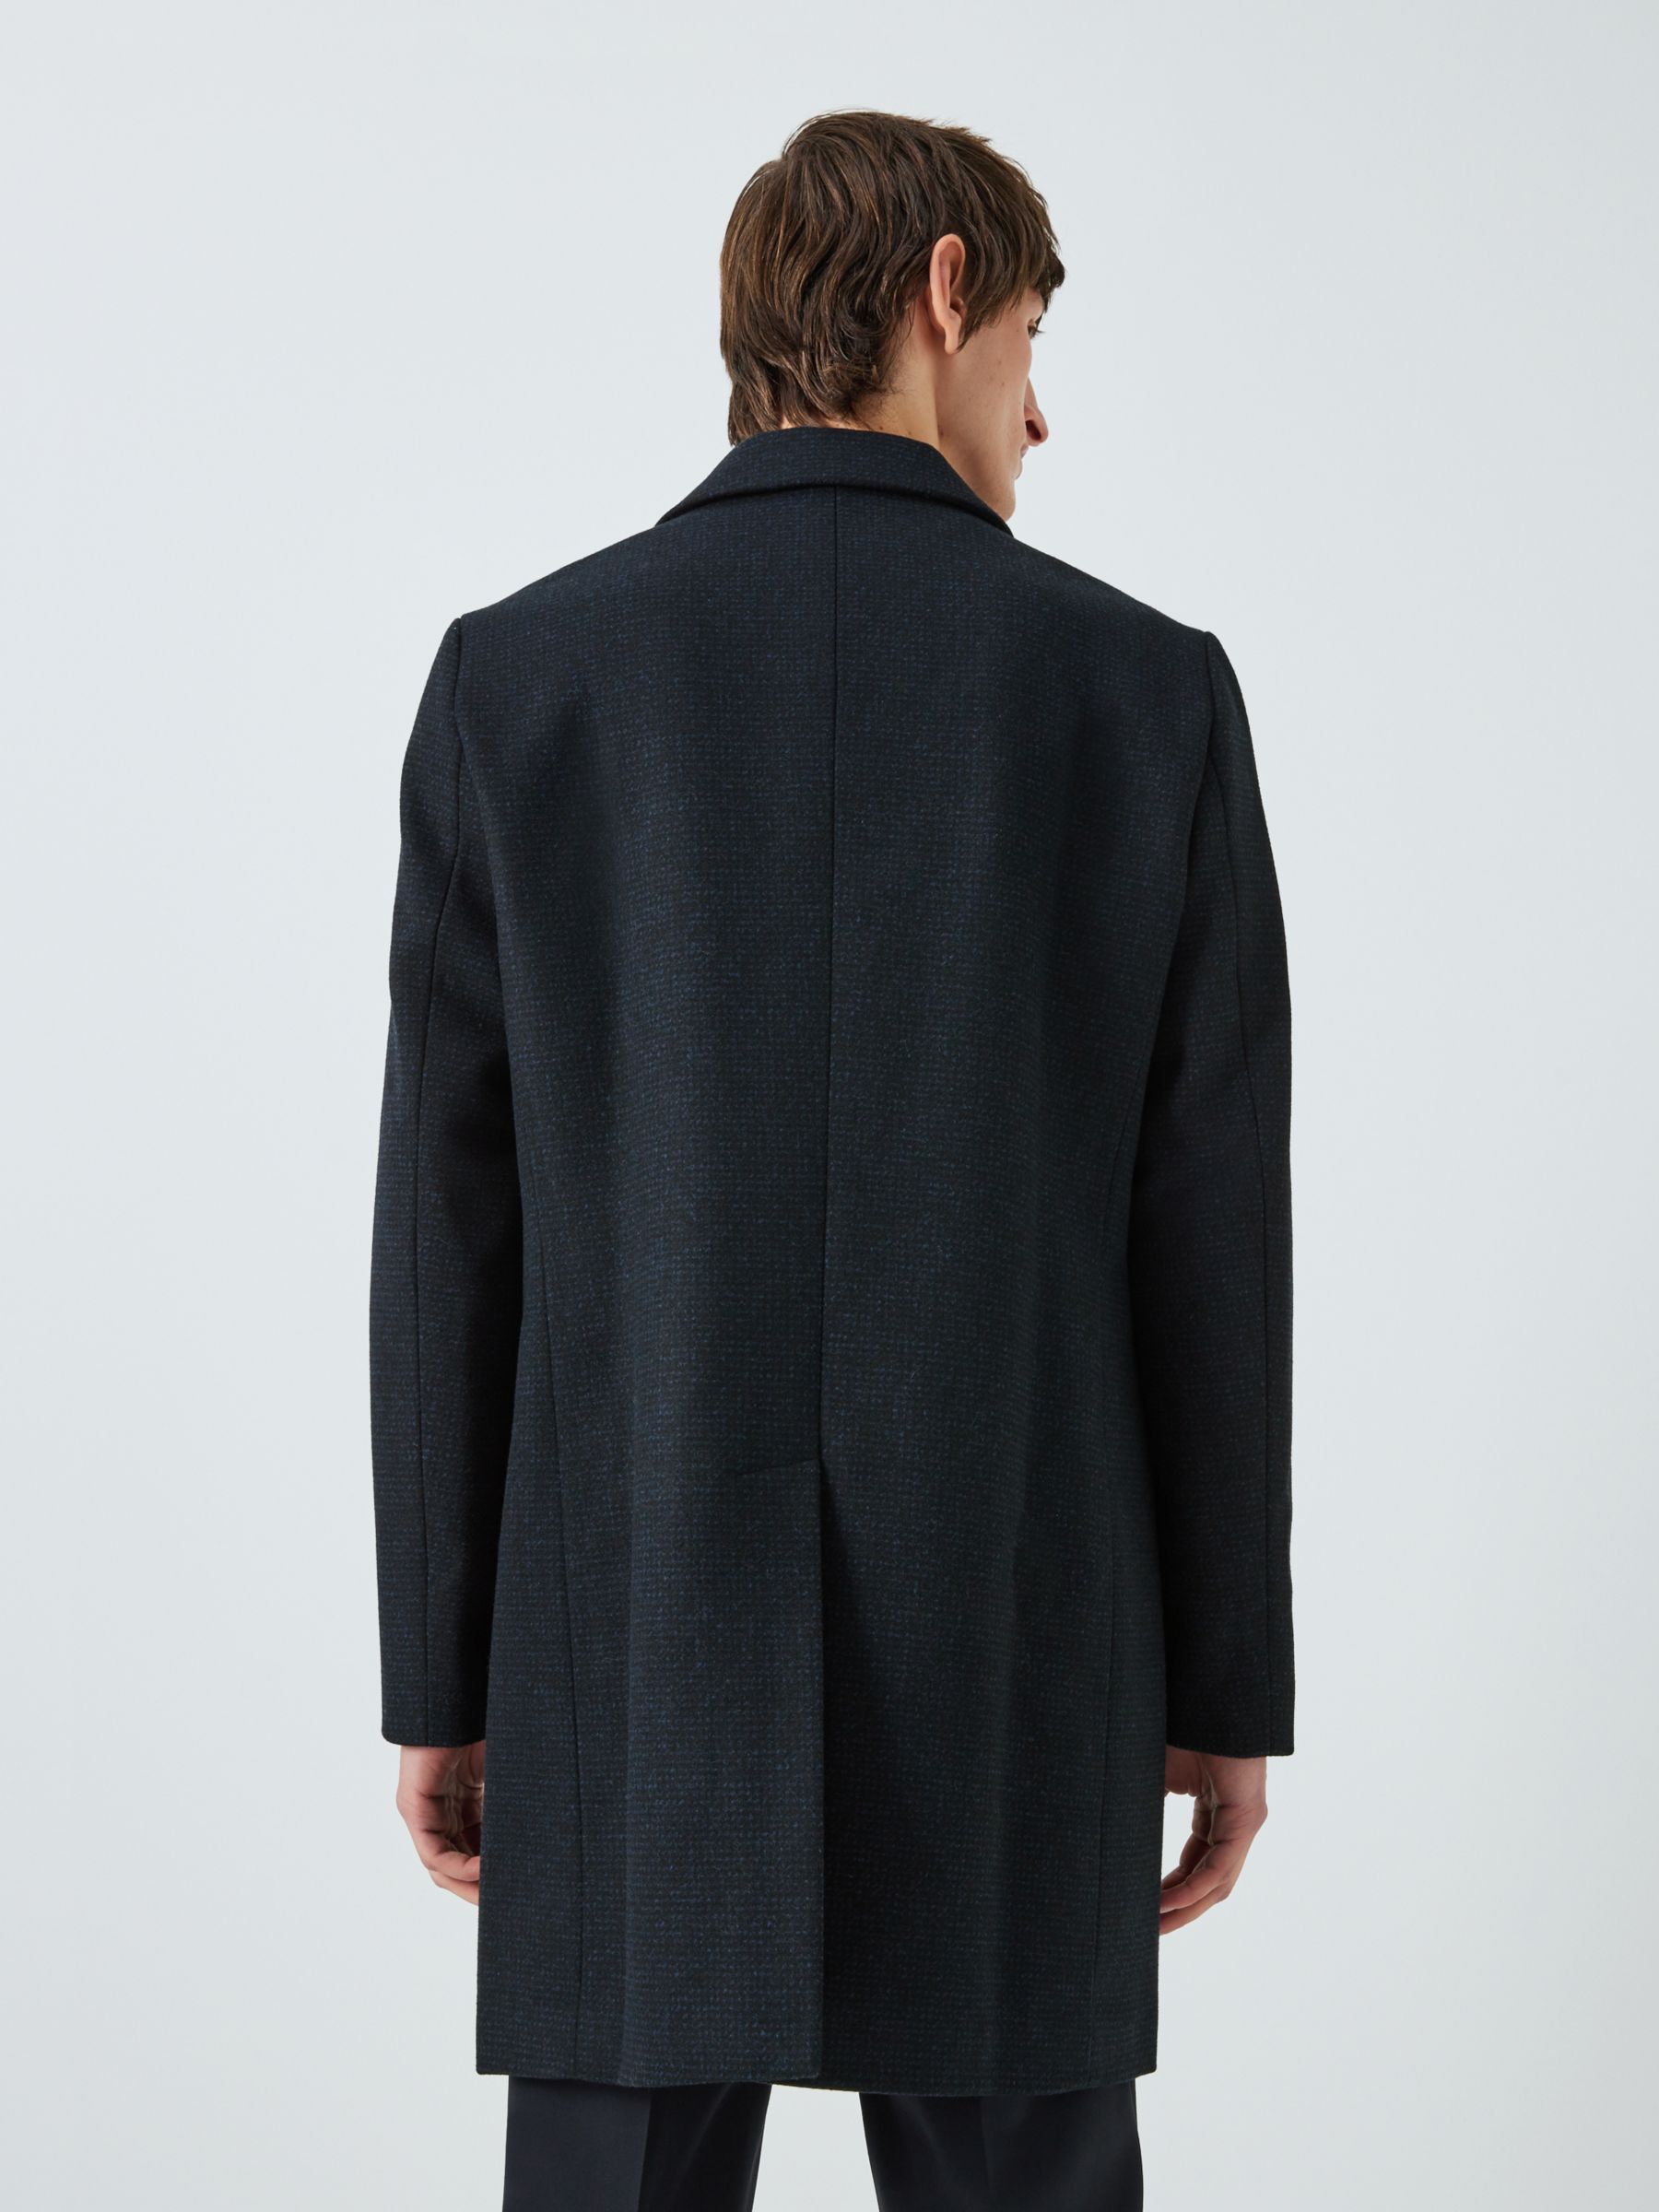 Kin Bonded Wool Blend Overcoat